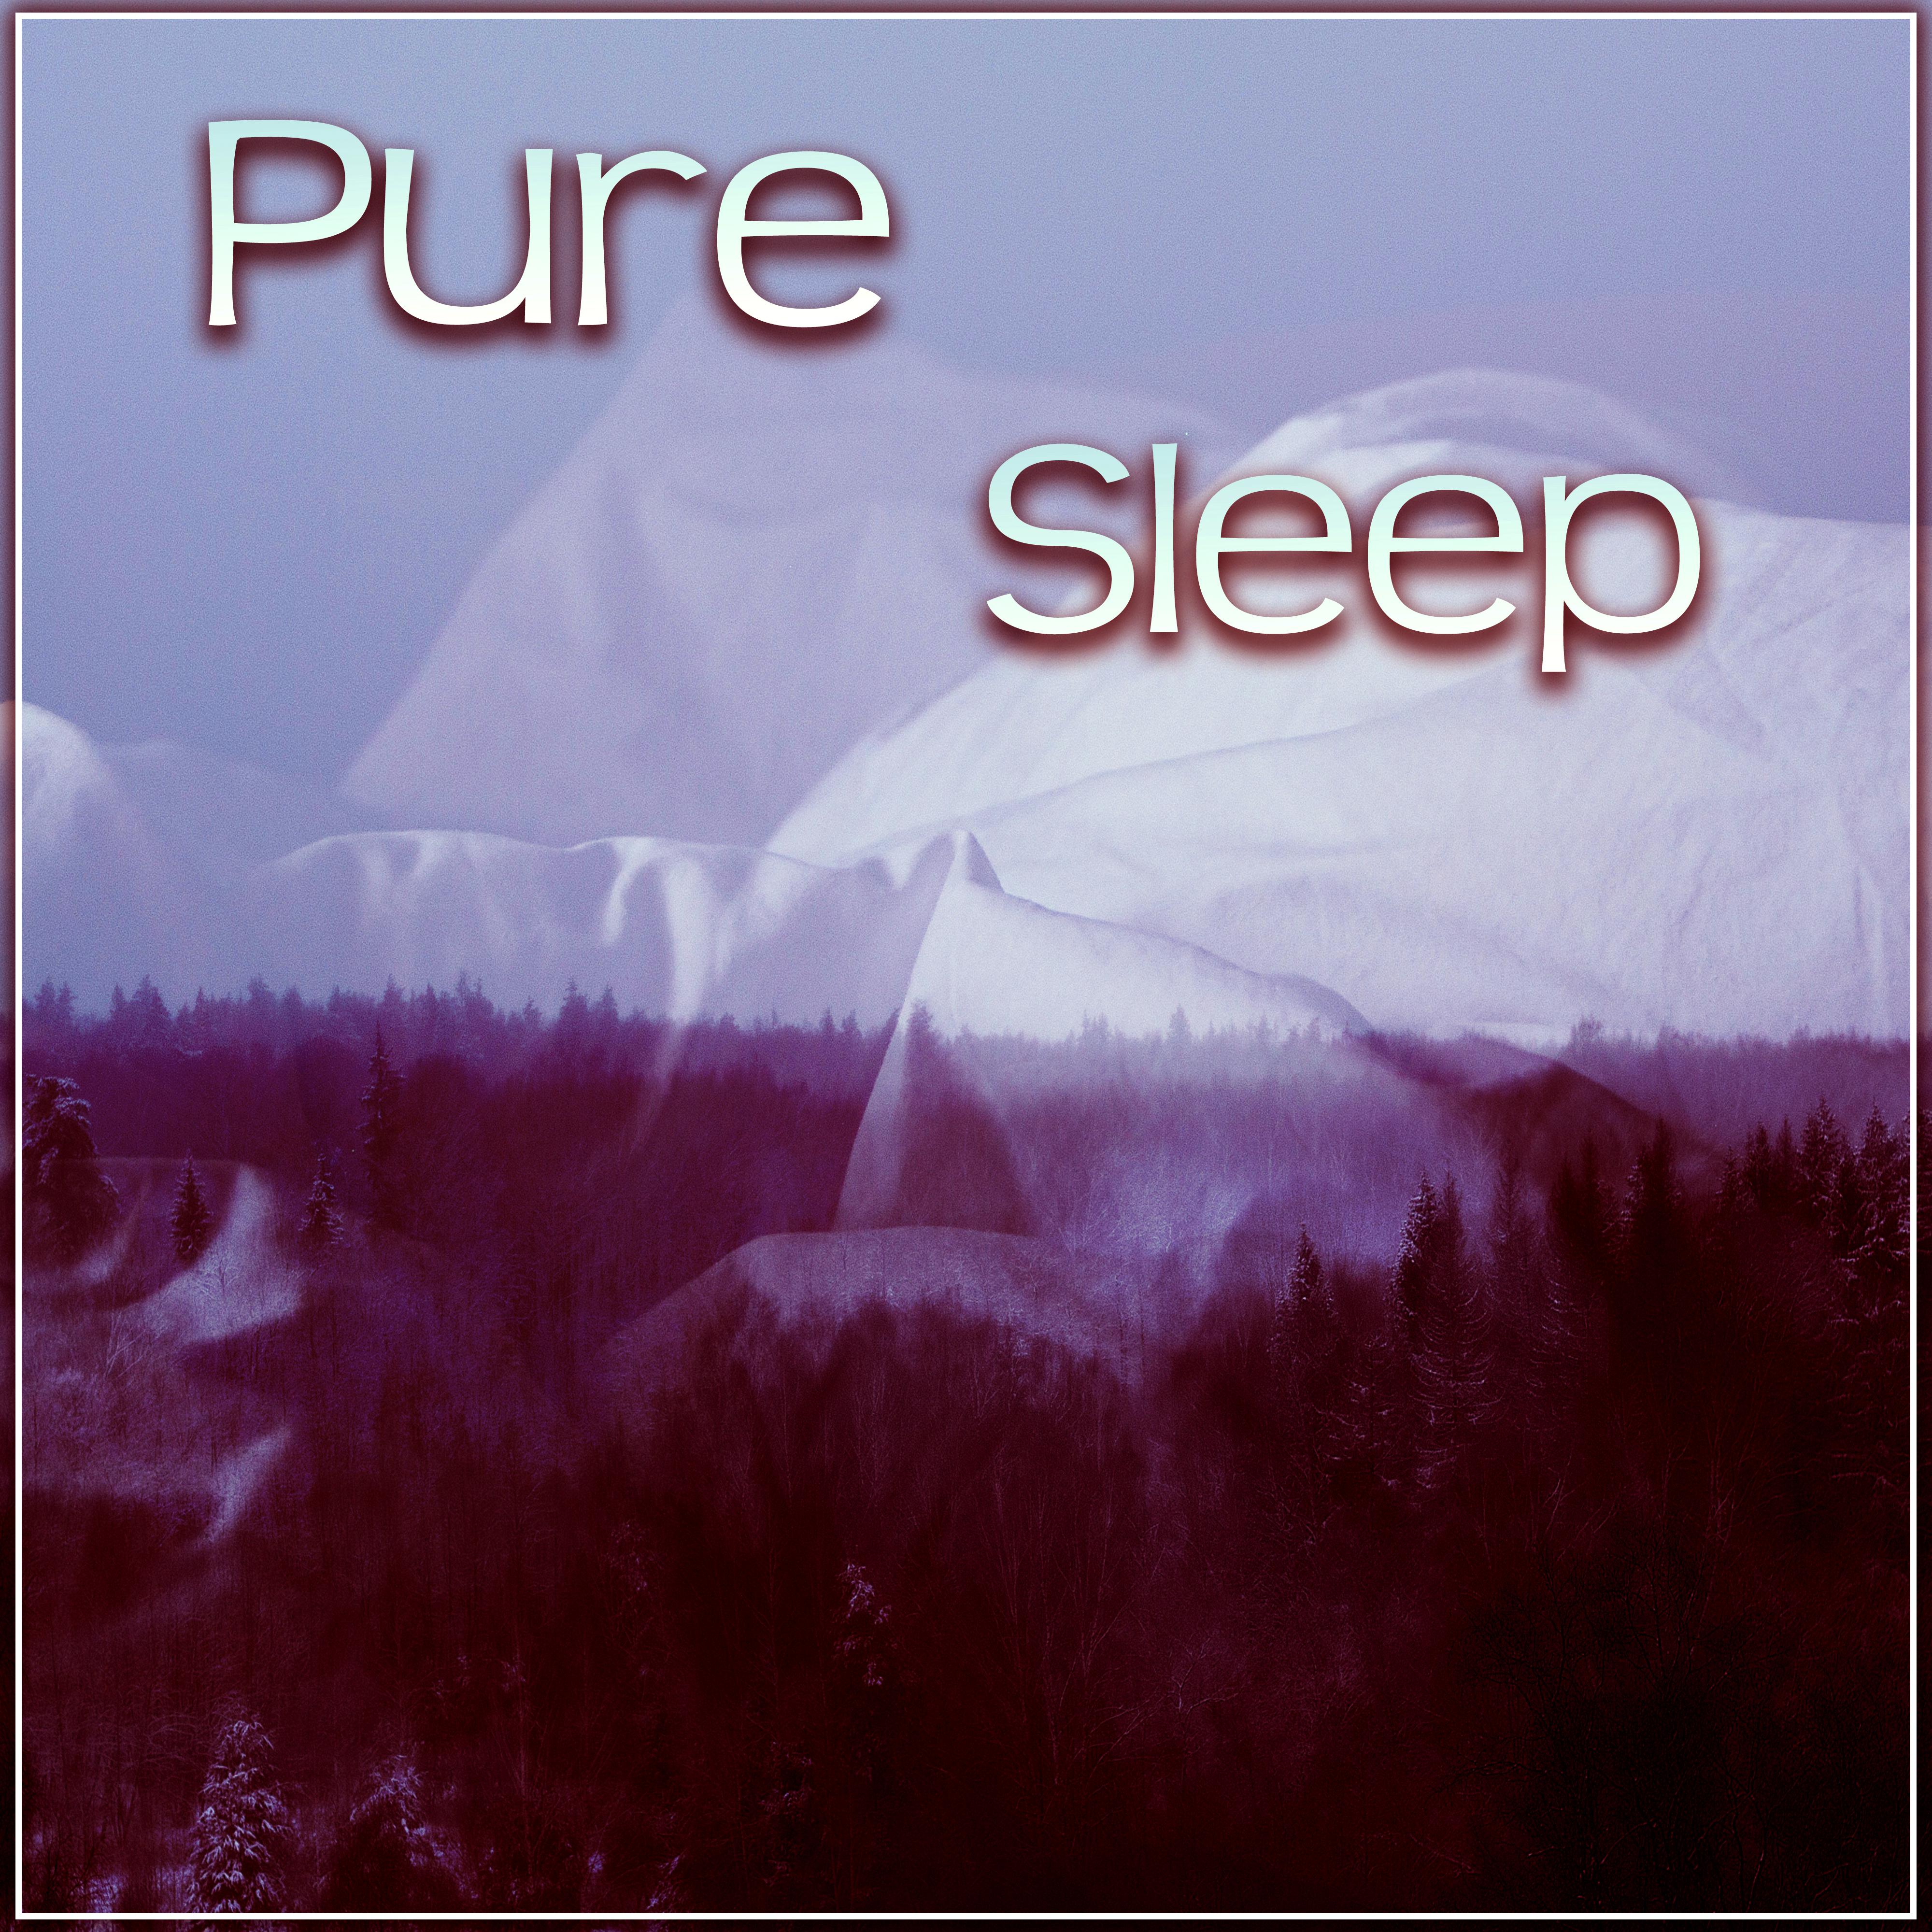 Pure Sleep – Peaceful Music, Harmony Music, Relaxation, Calm Music, Sleep Time Music, Healing Your Soul